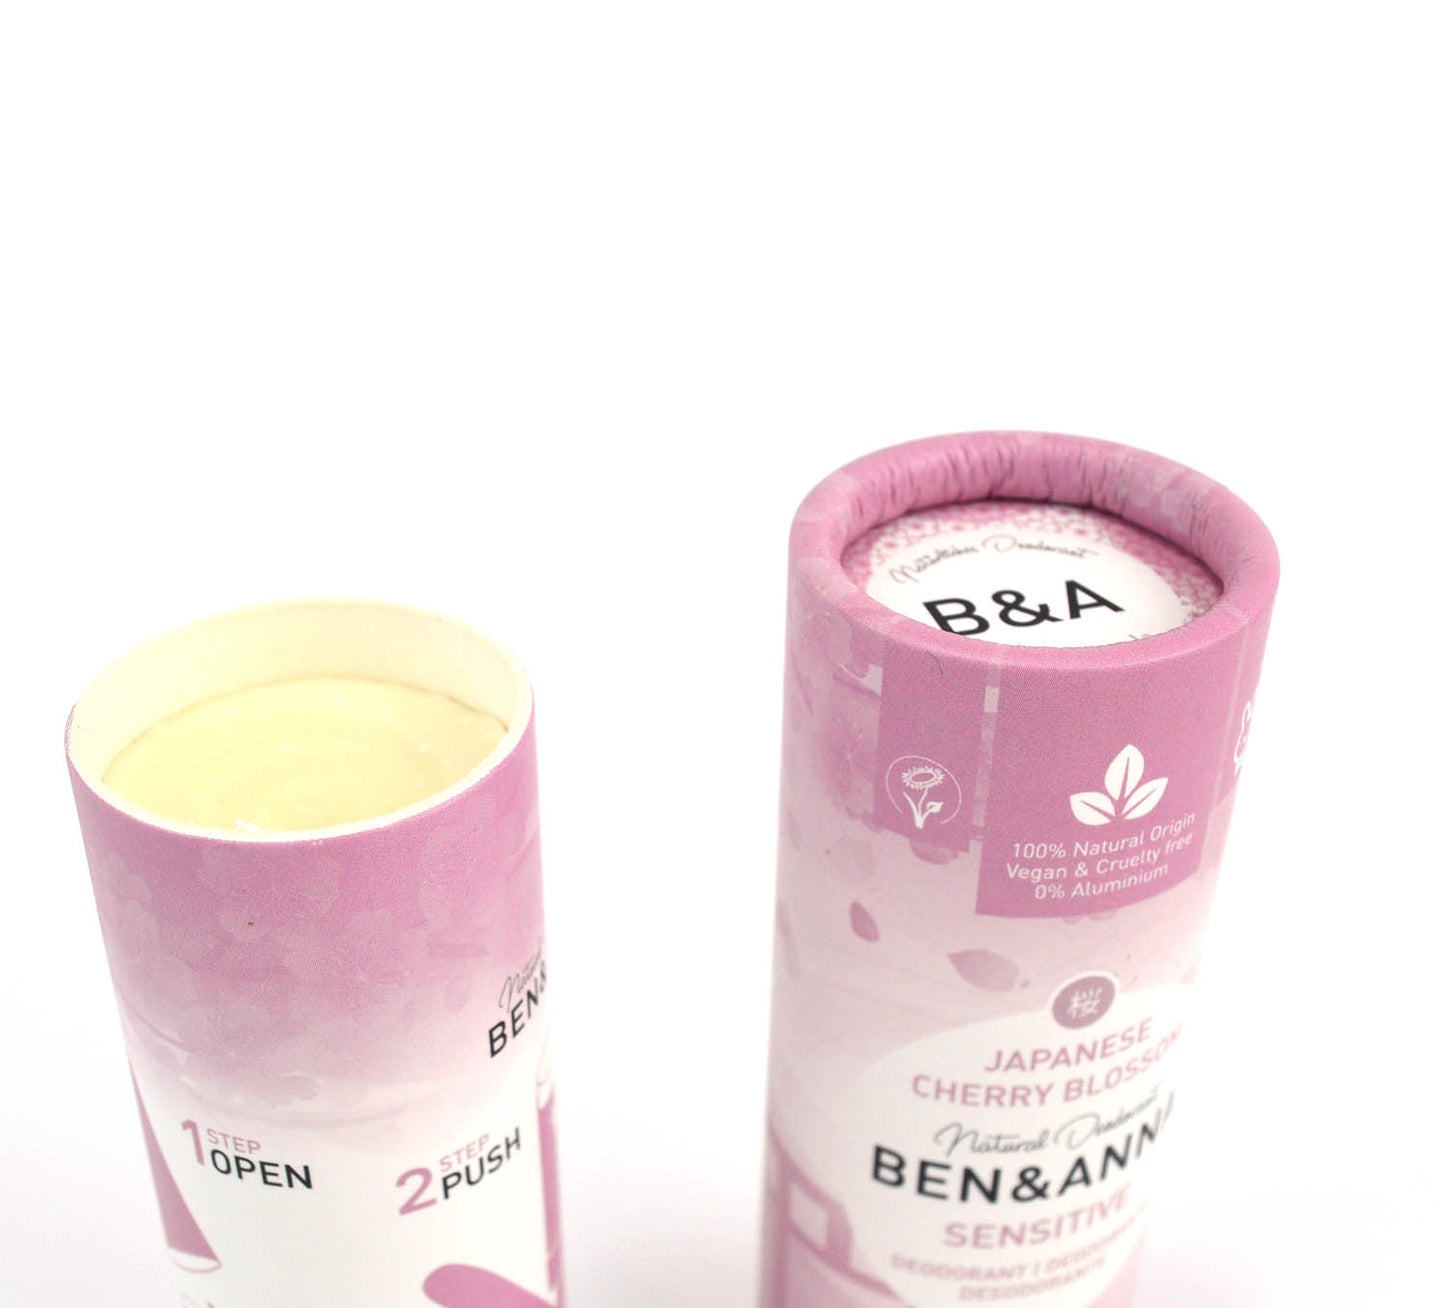 Desodorante Natural Benn&Anna